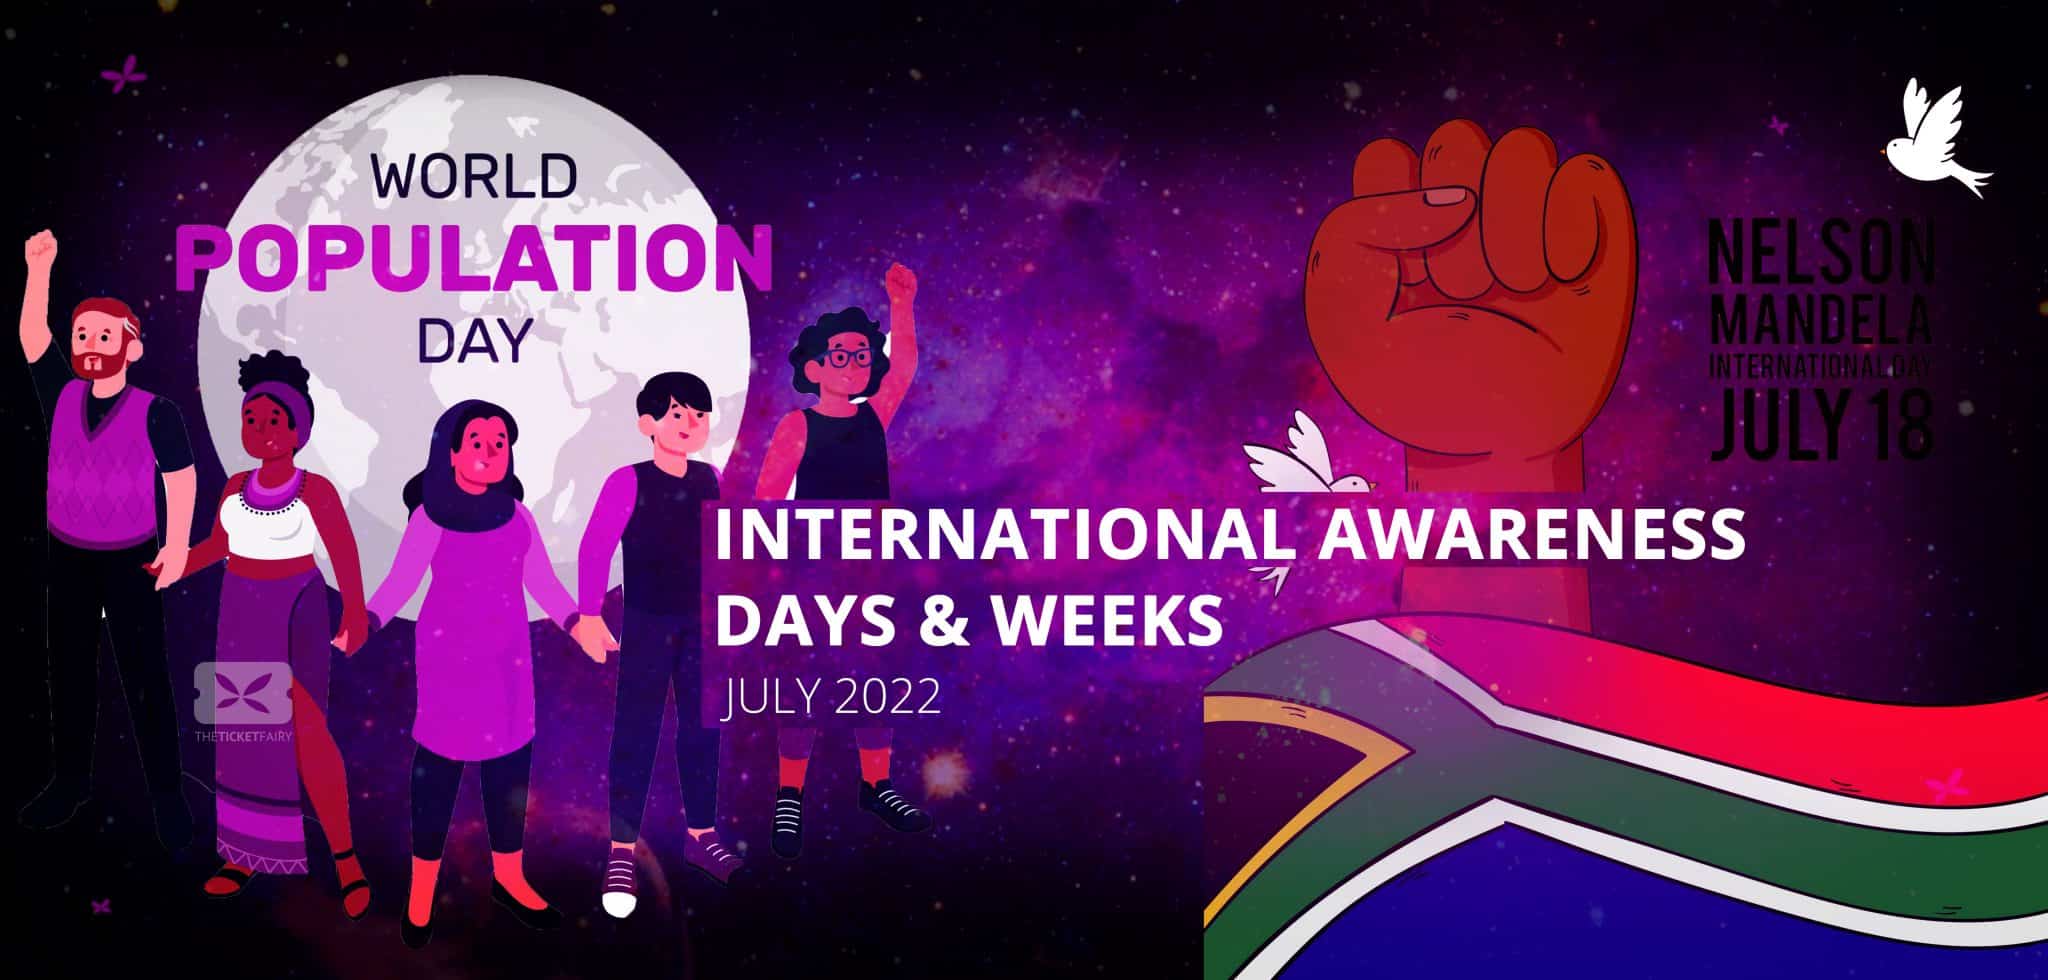 international-awareness-days-in-july-2022-tfword